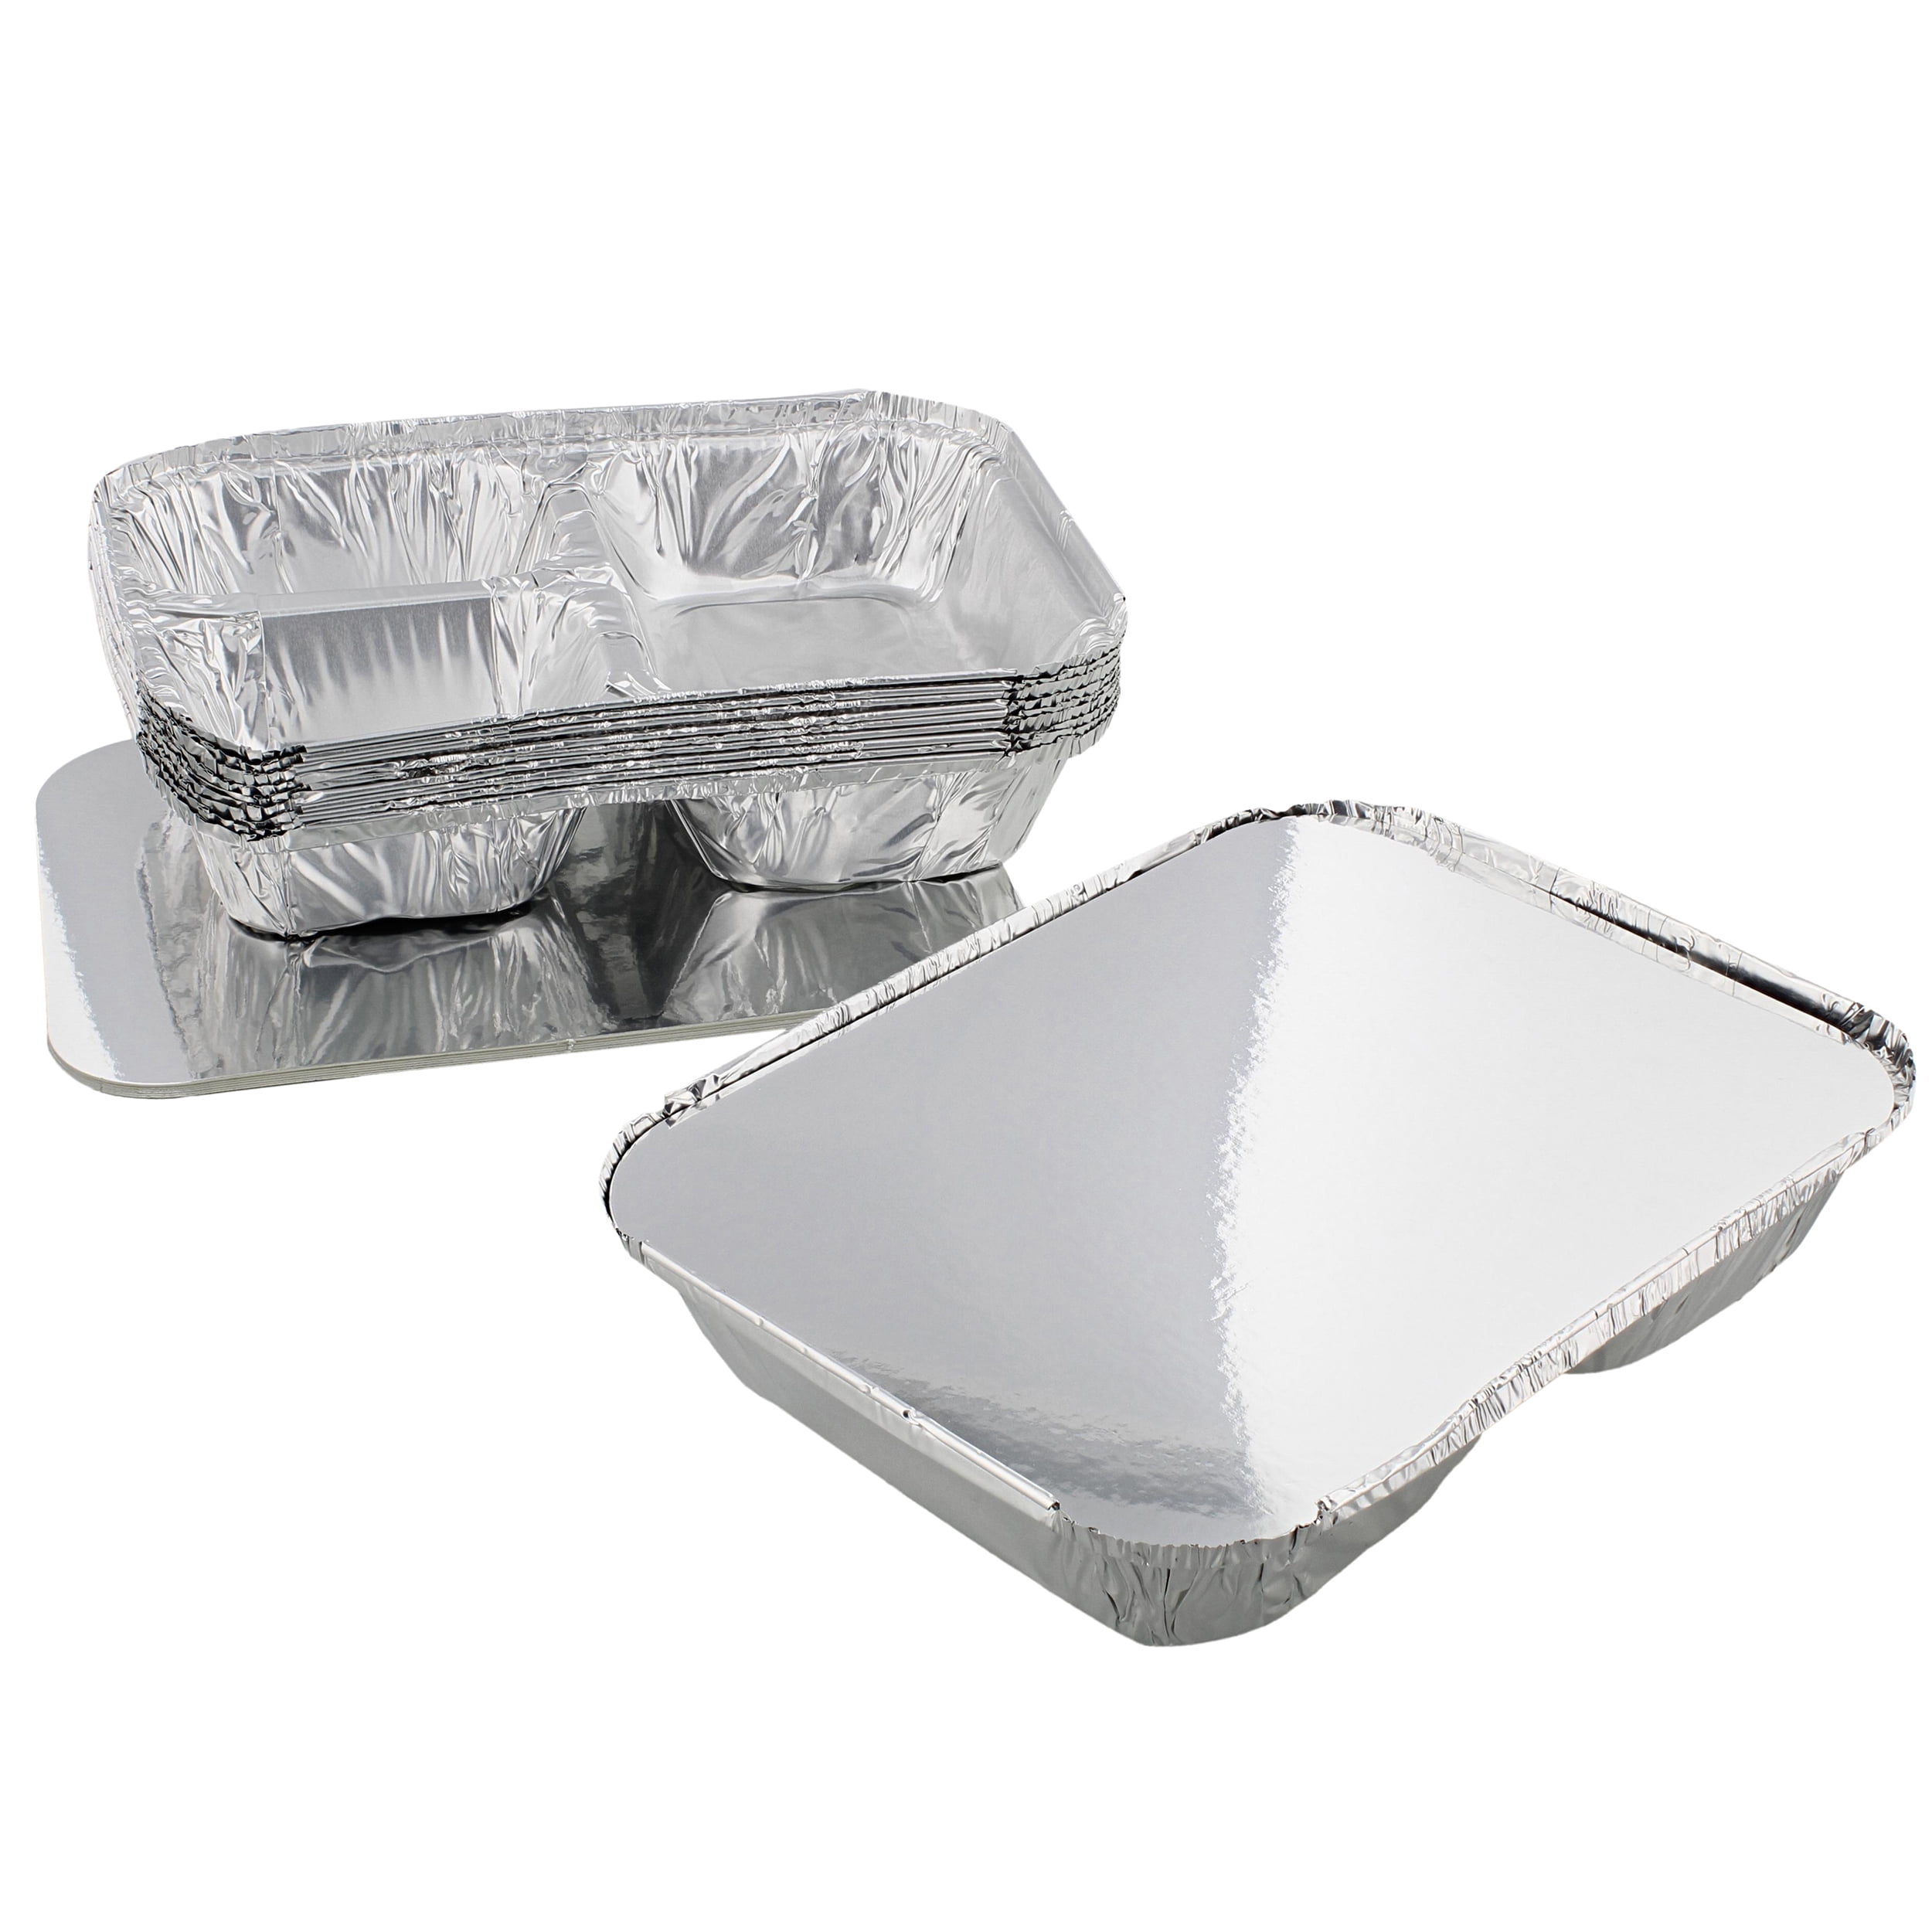 Aluminium tray disposal and recycling